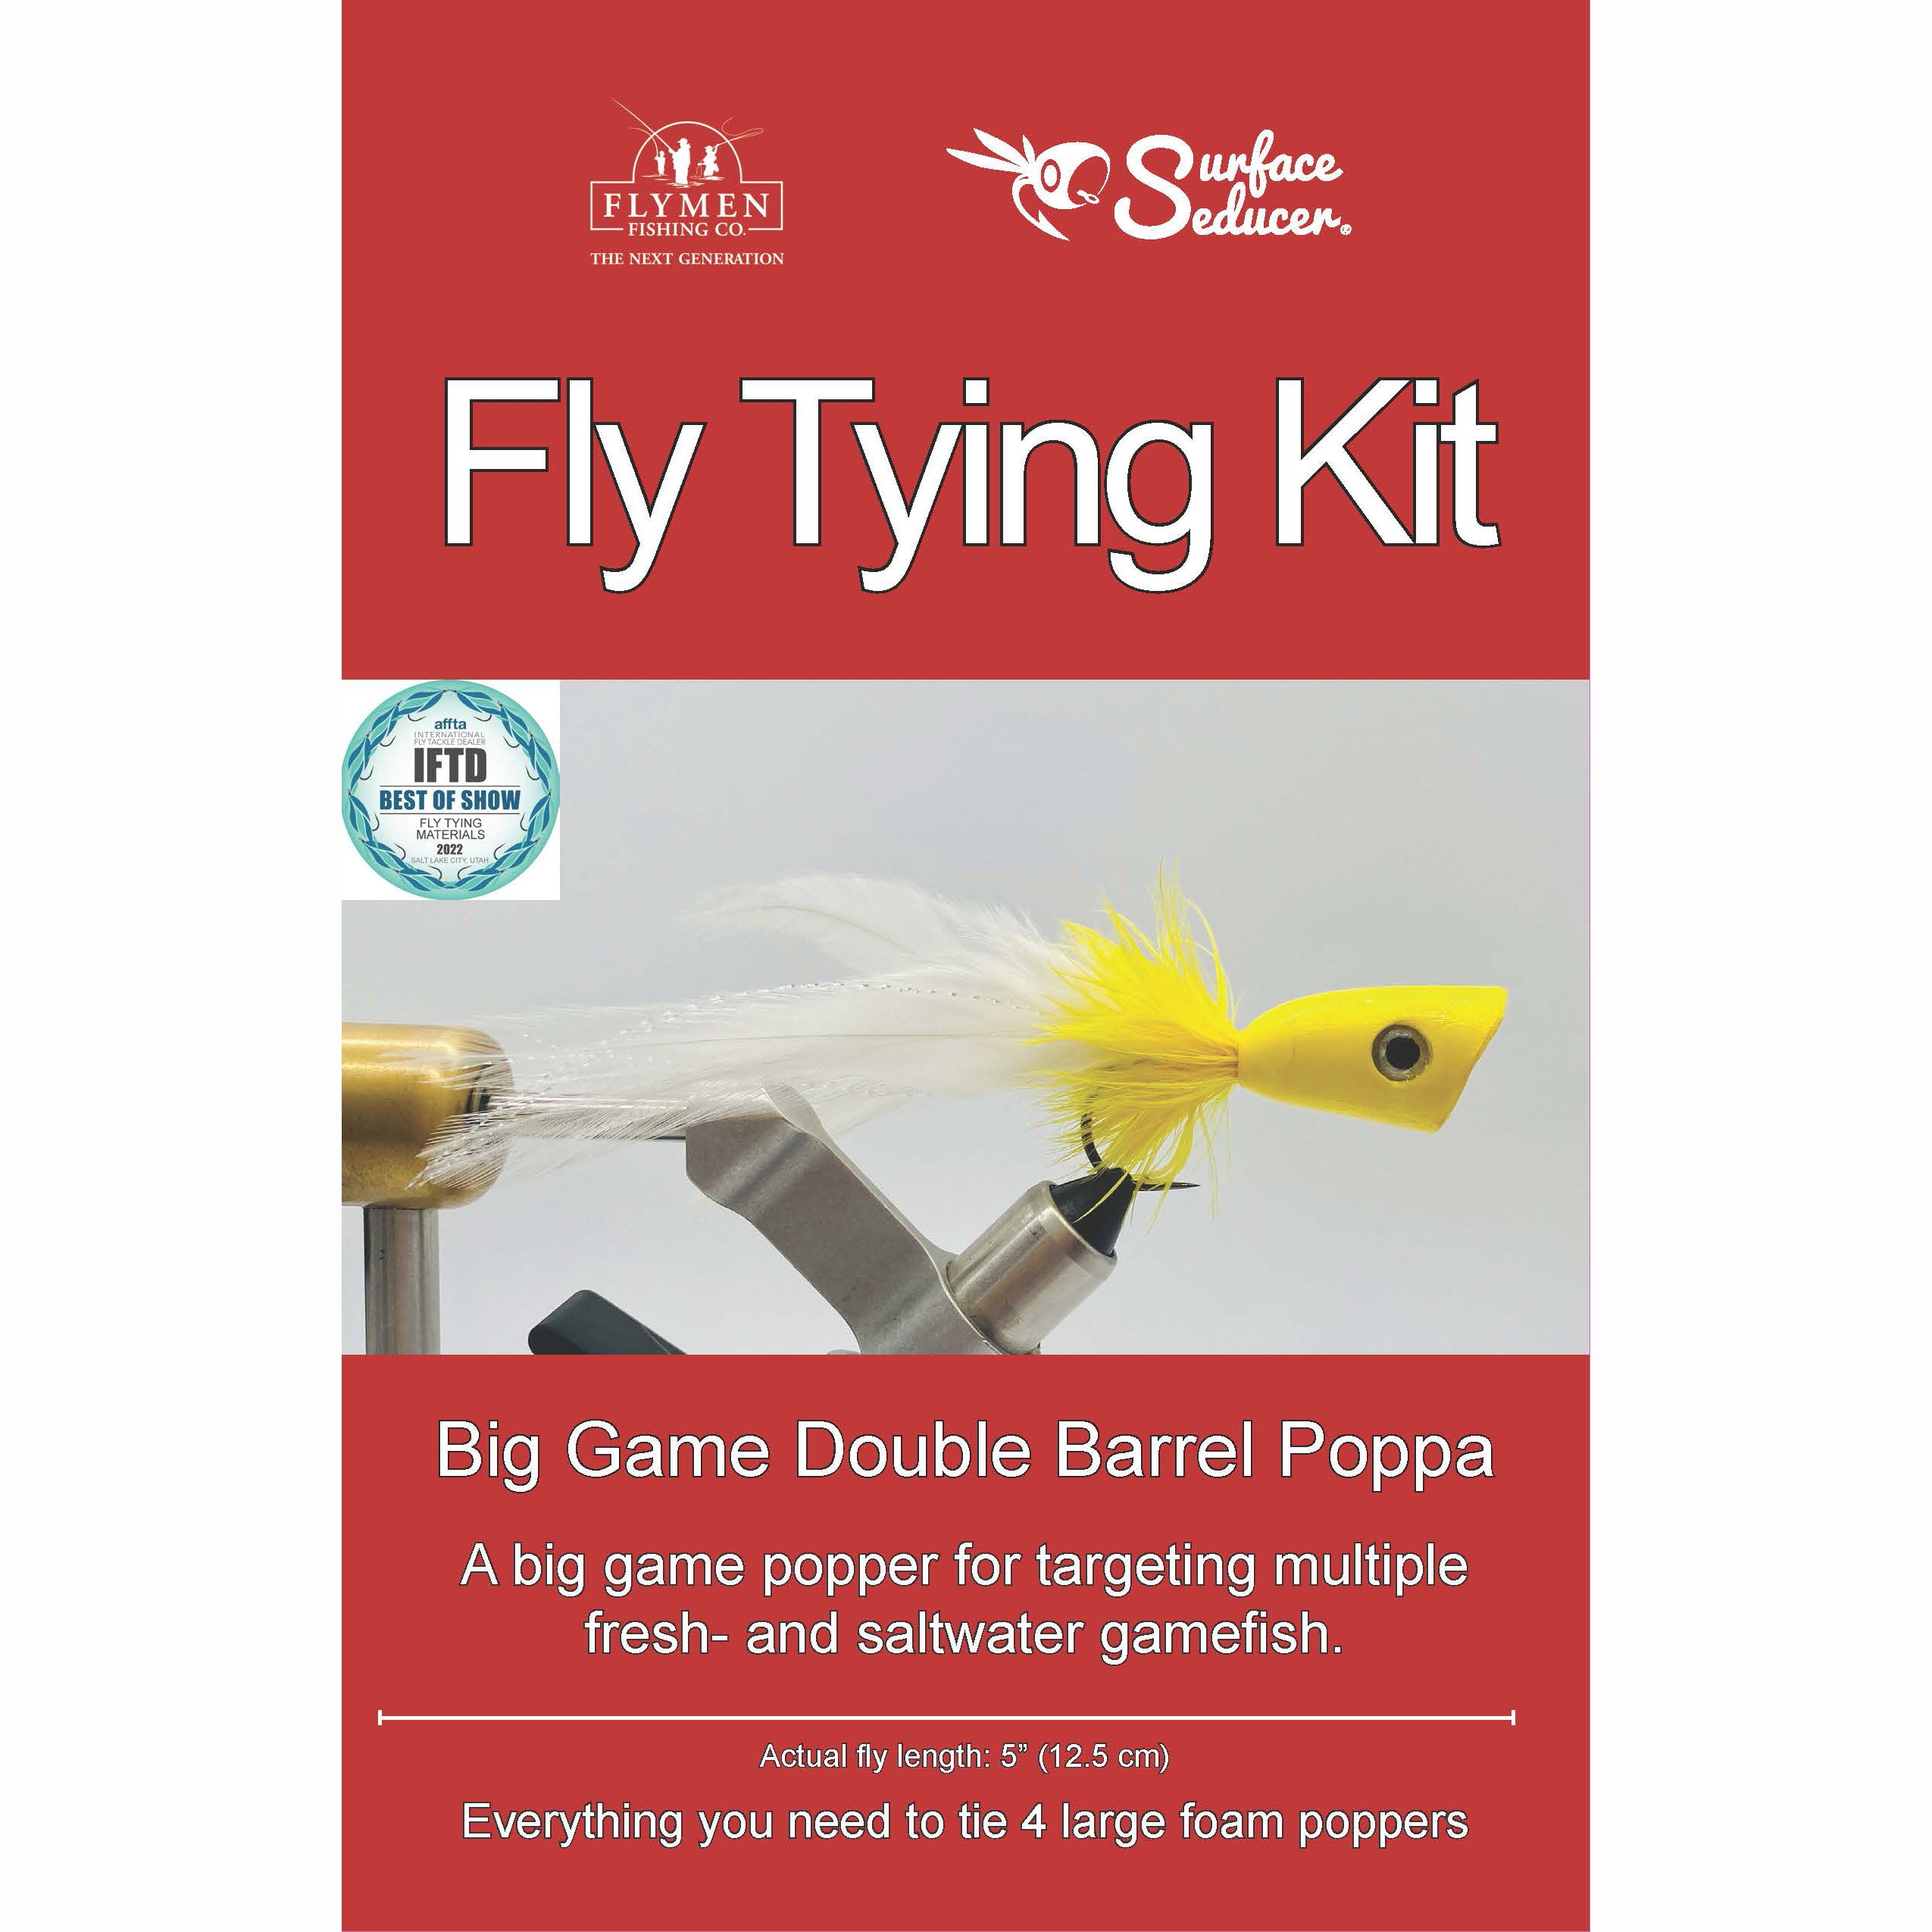 Flymen Fishing Company Big Game Double Barrel Poppa Fly-Tying Kit